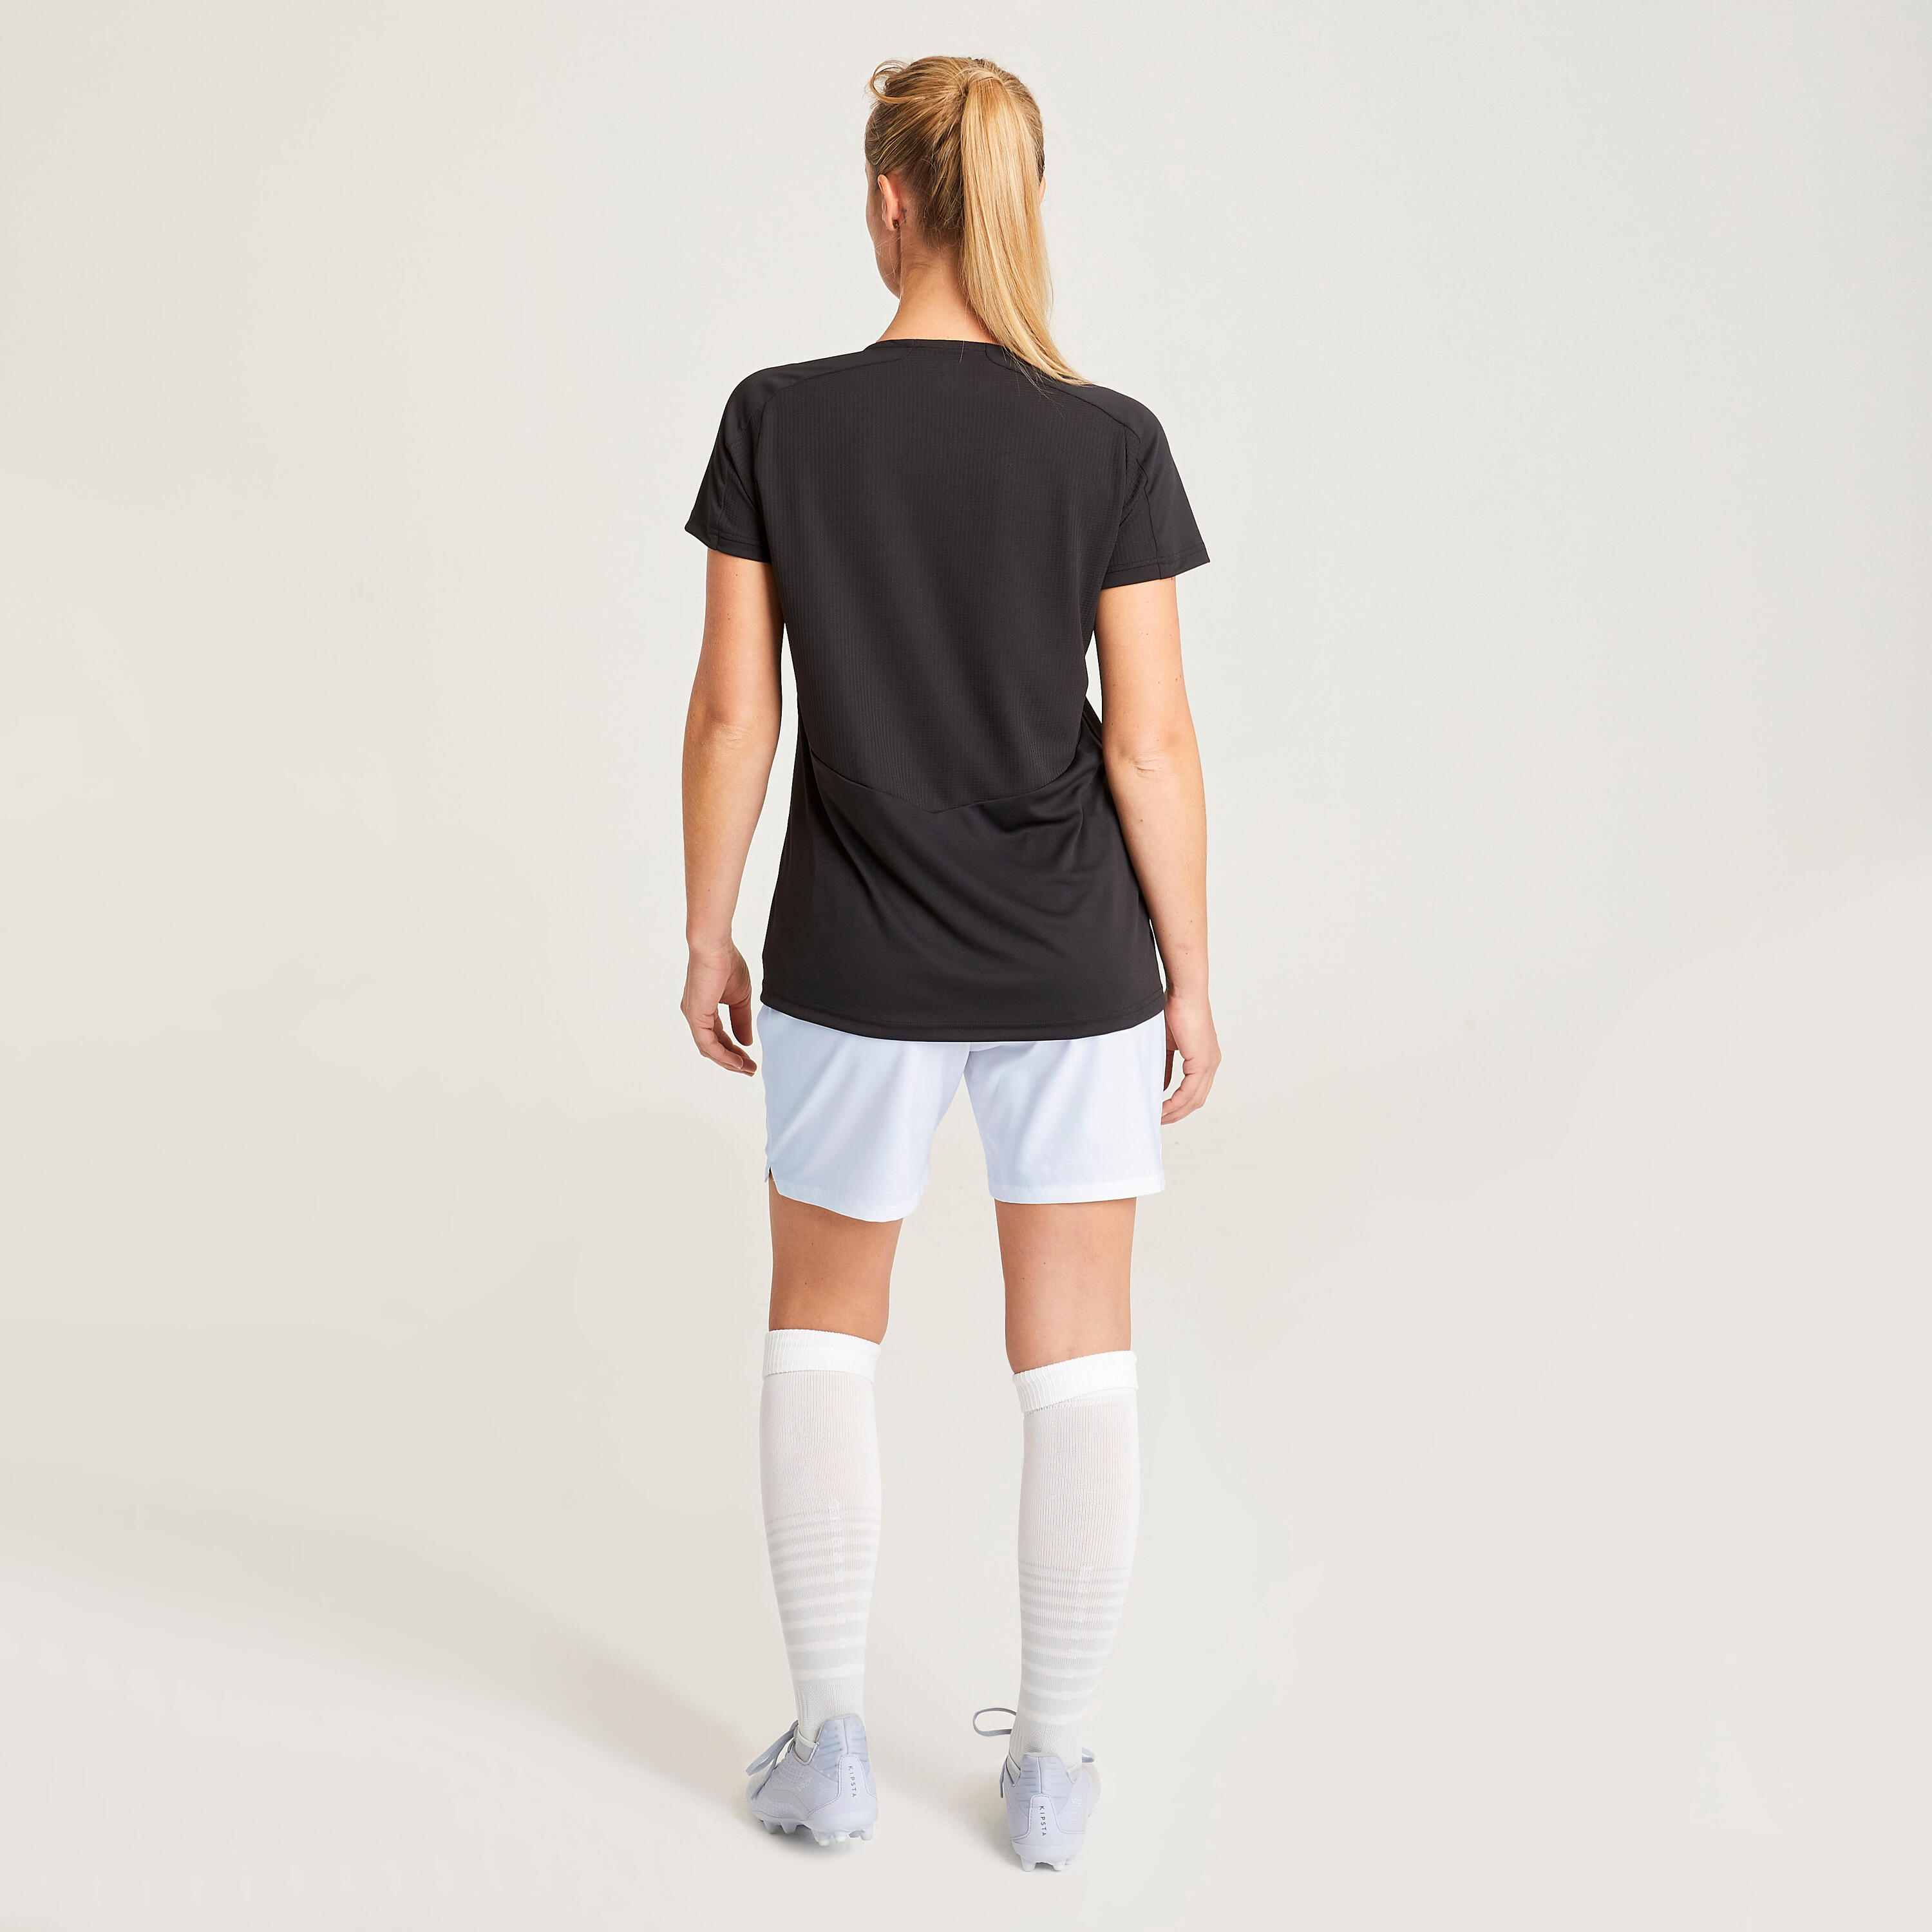 Women's Plain Football Shirt - Black 15/29